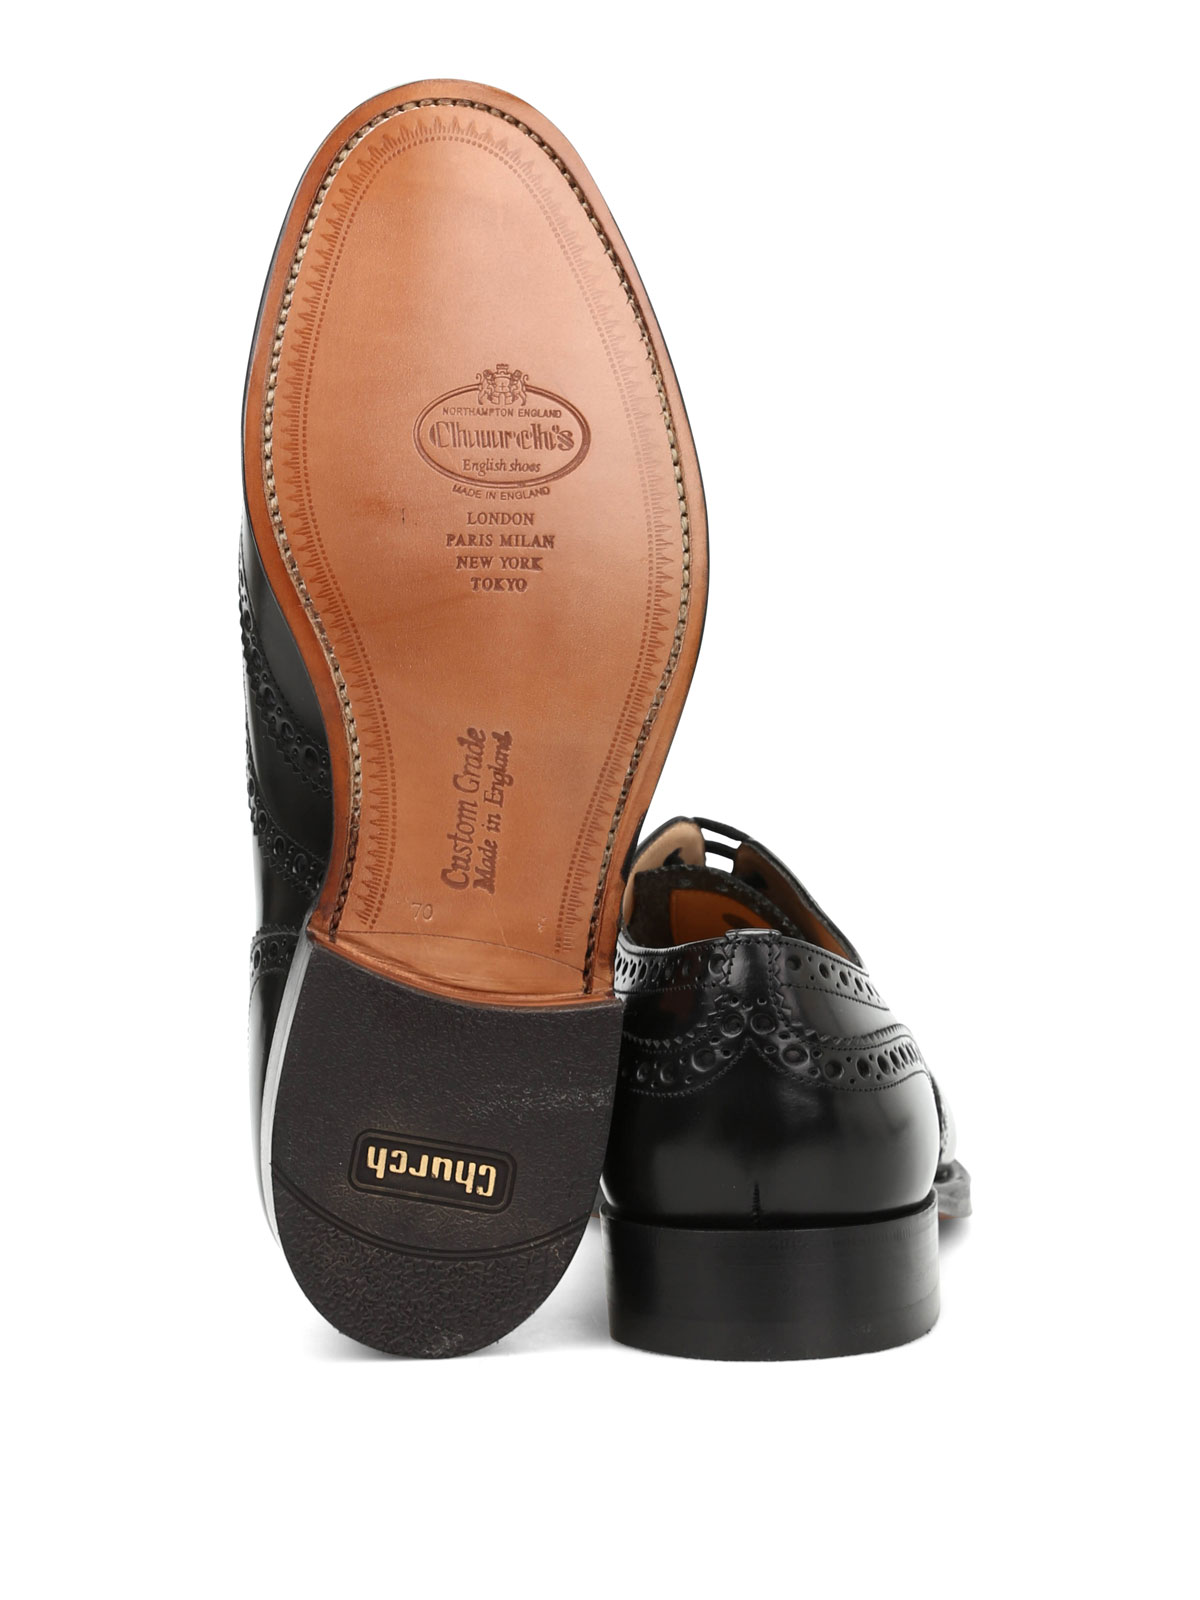 Women's Church's Burwood Met. Black Leather Stud Oxford Brogue US Size  12 Shoes | eBay